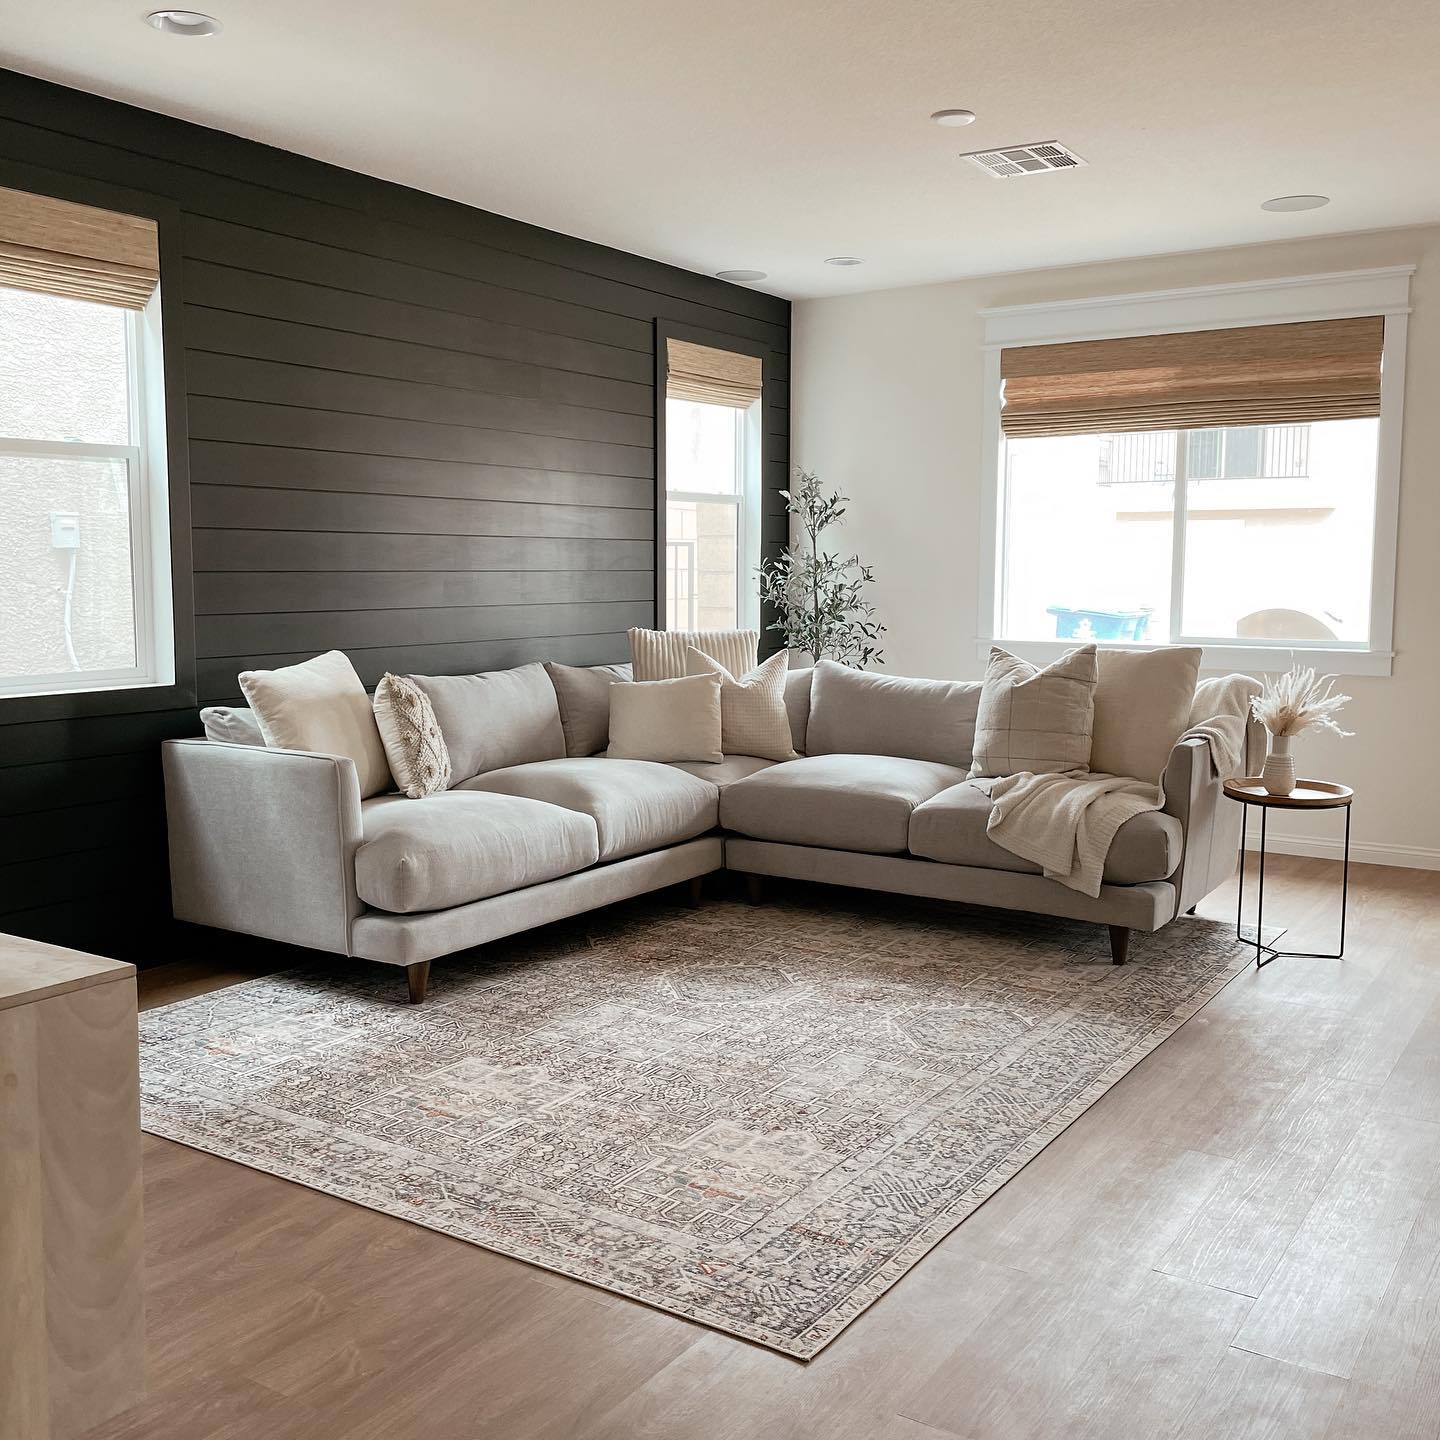 Single Sectional - Apartment Living Room Decor Ideas